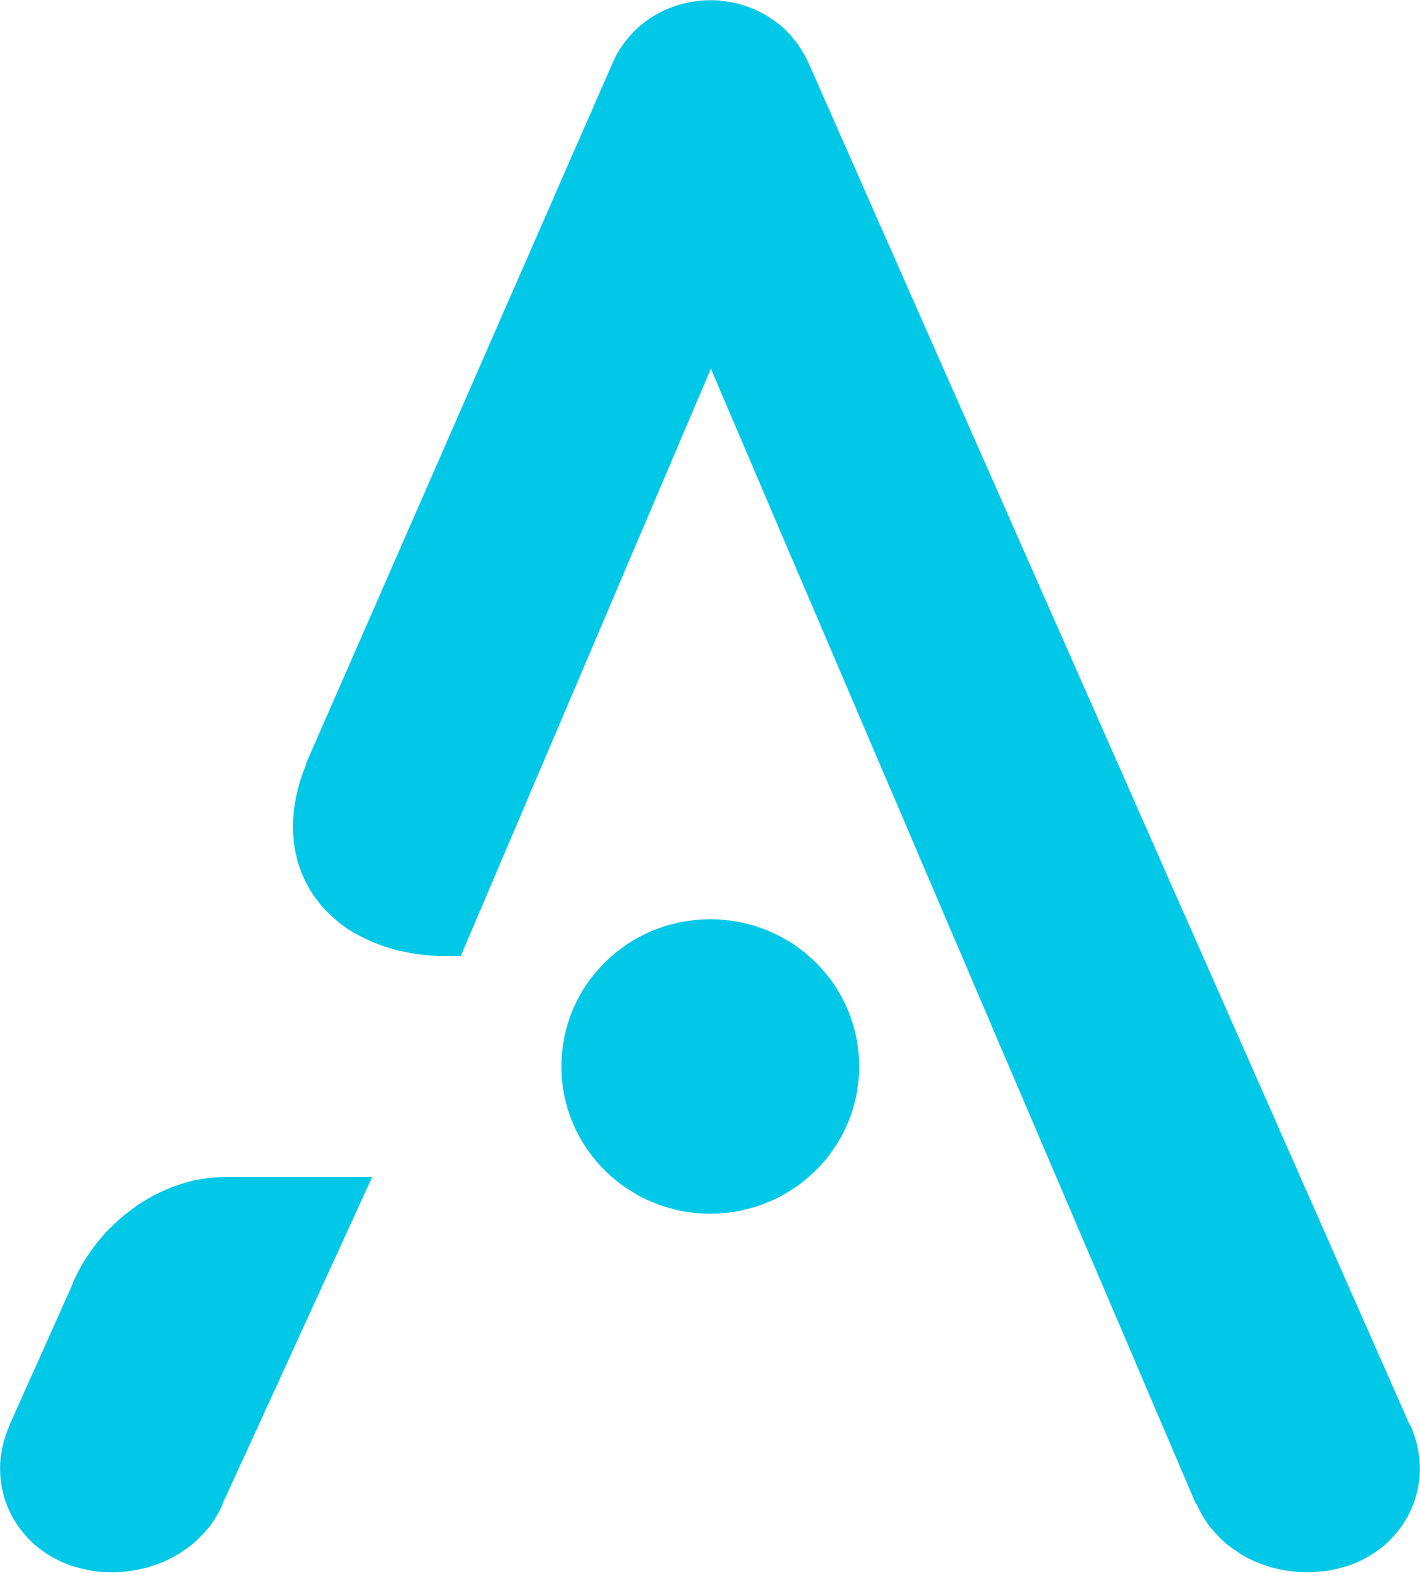 ADTRAN logo (PNG transparent)